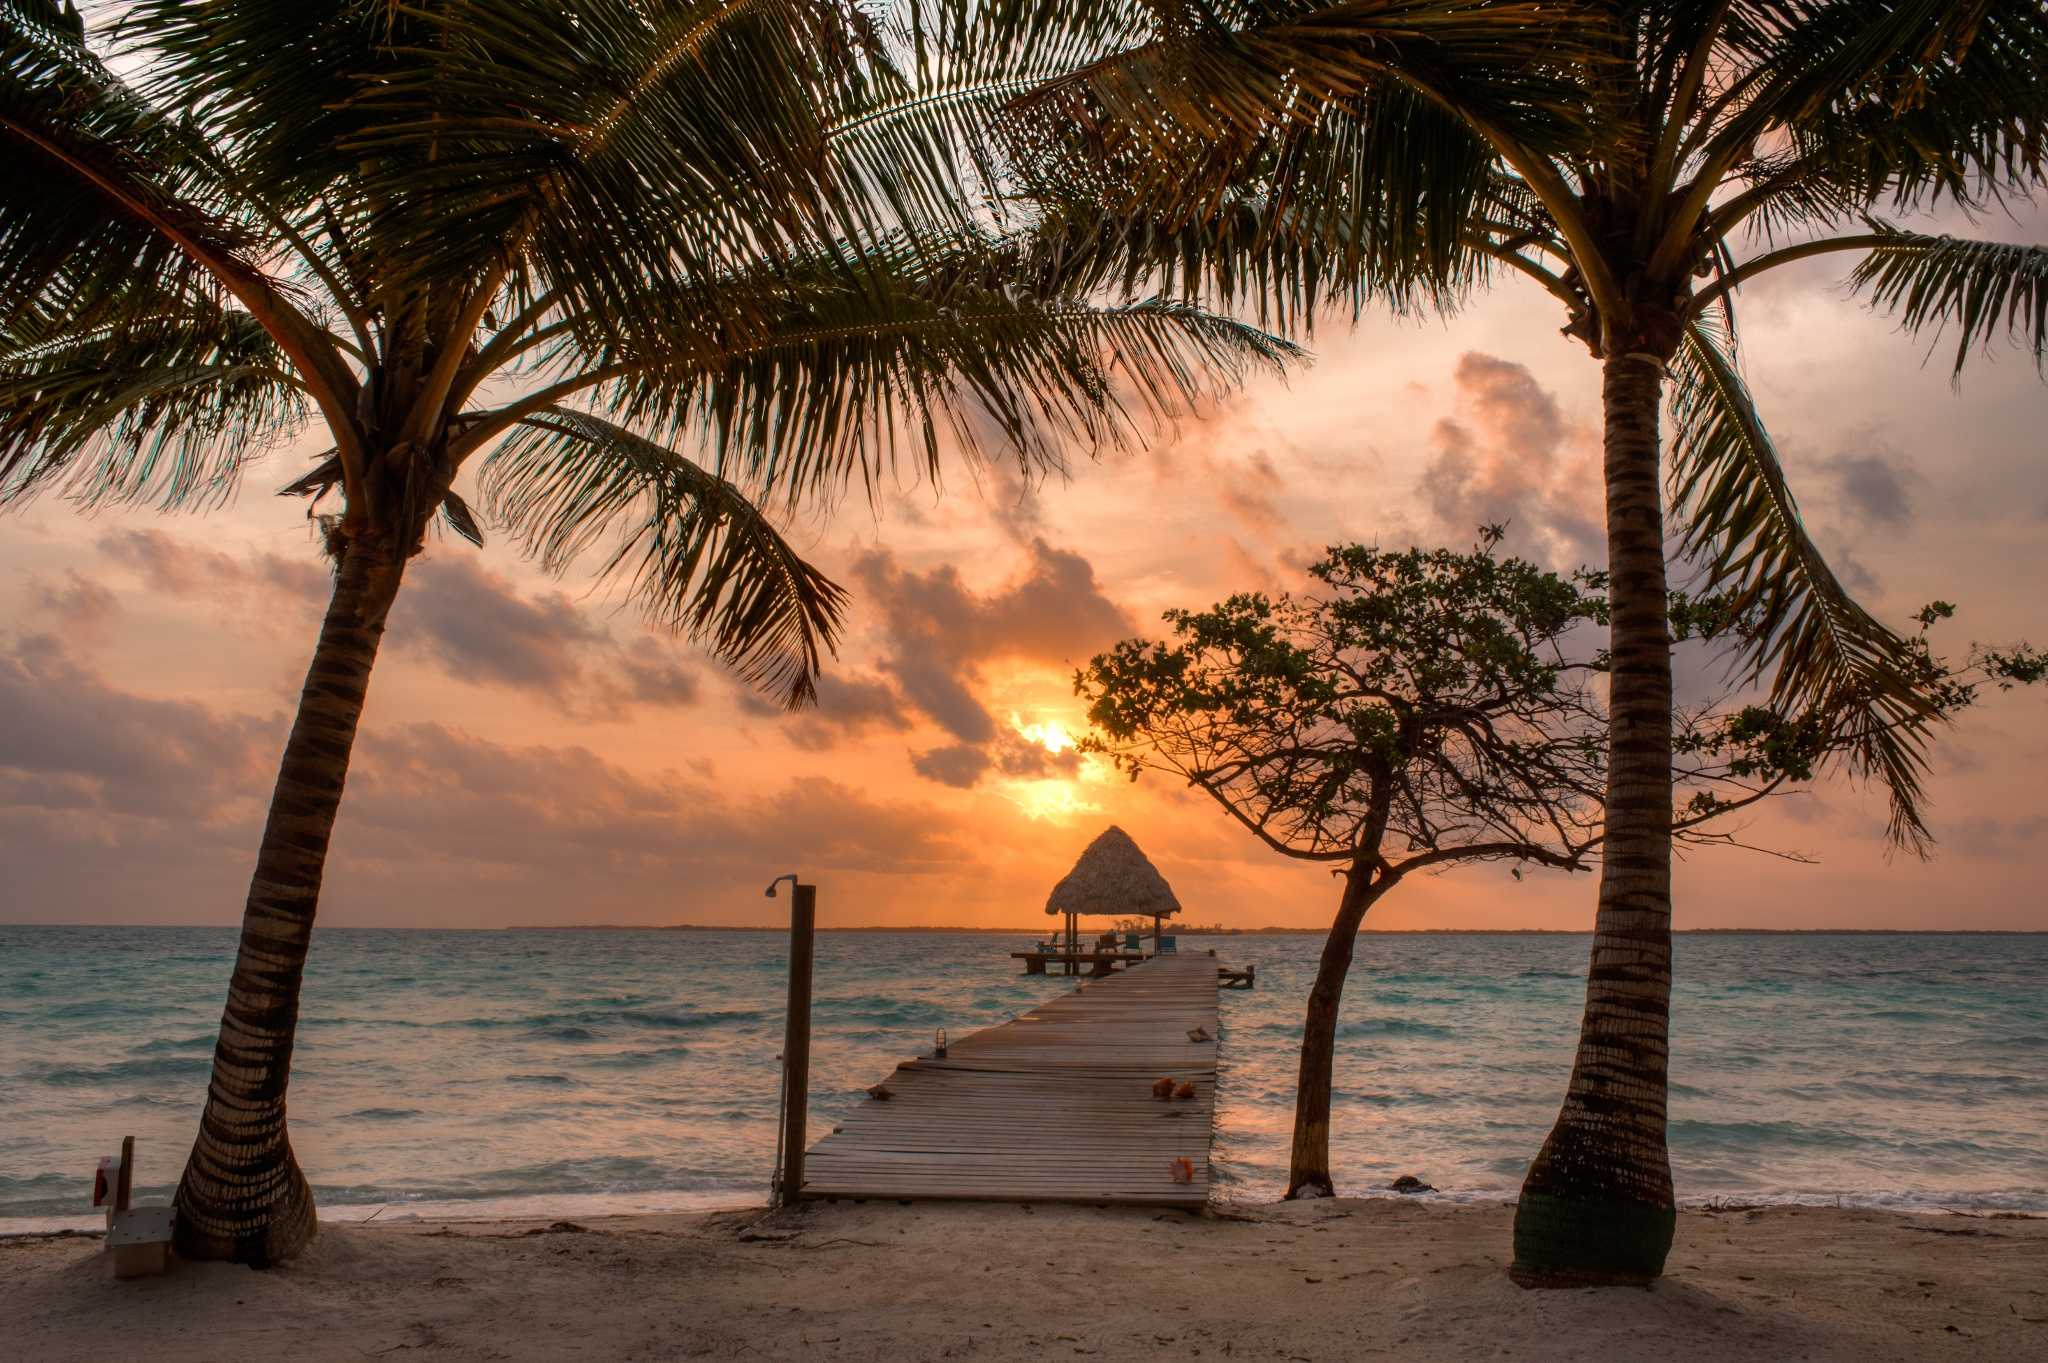 sunrise, Belize, wooden walkway, palm trees, islands, tropical